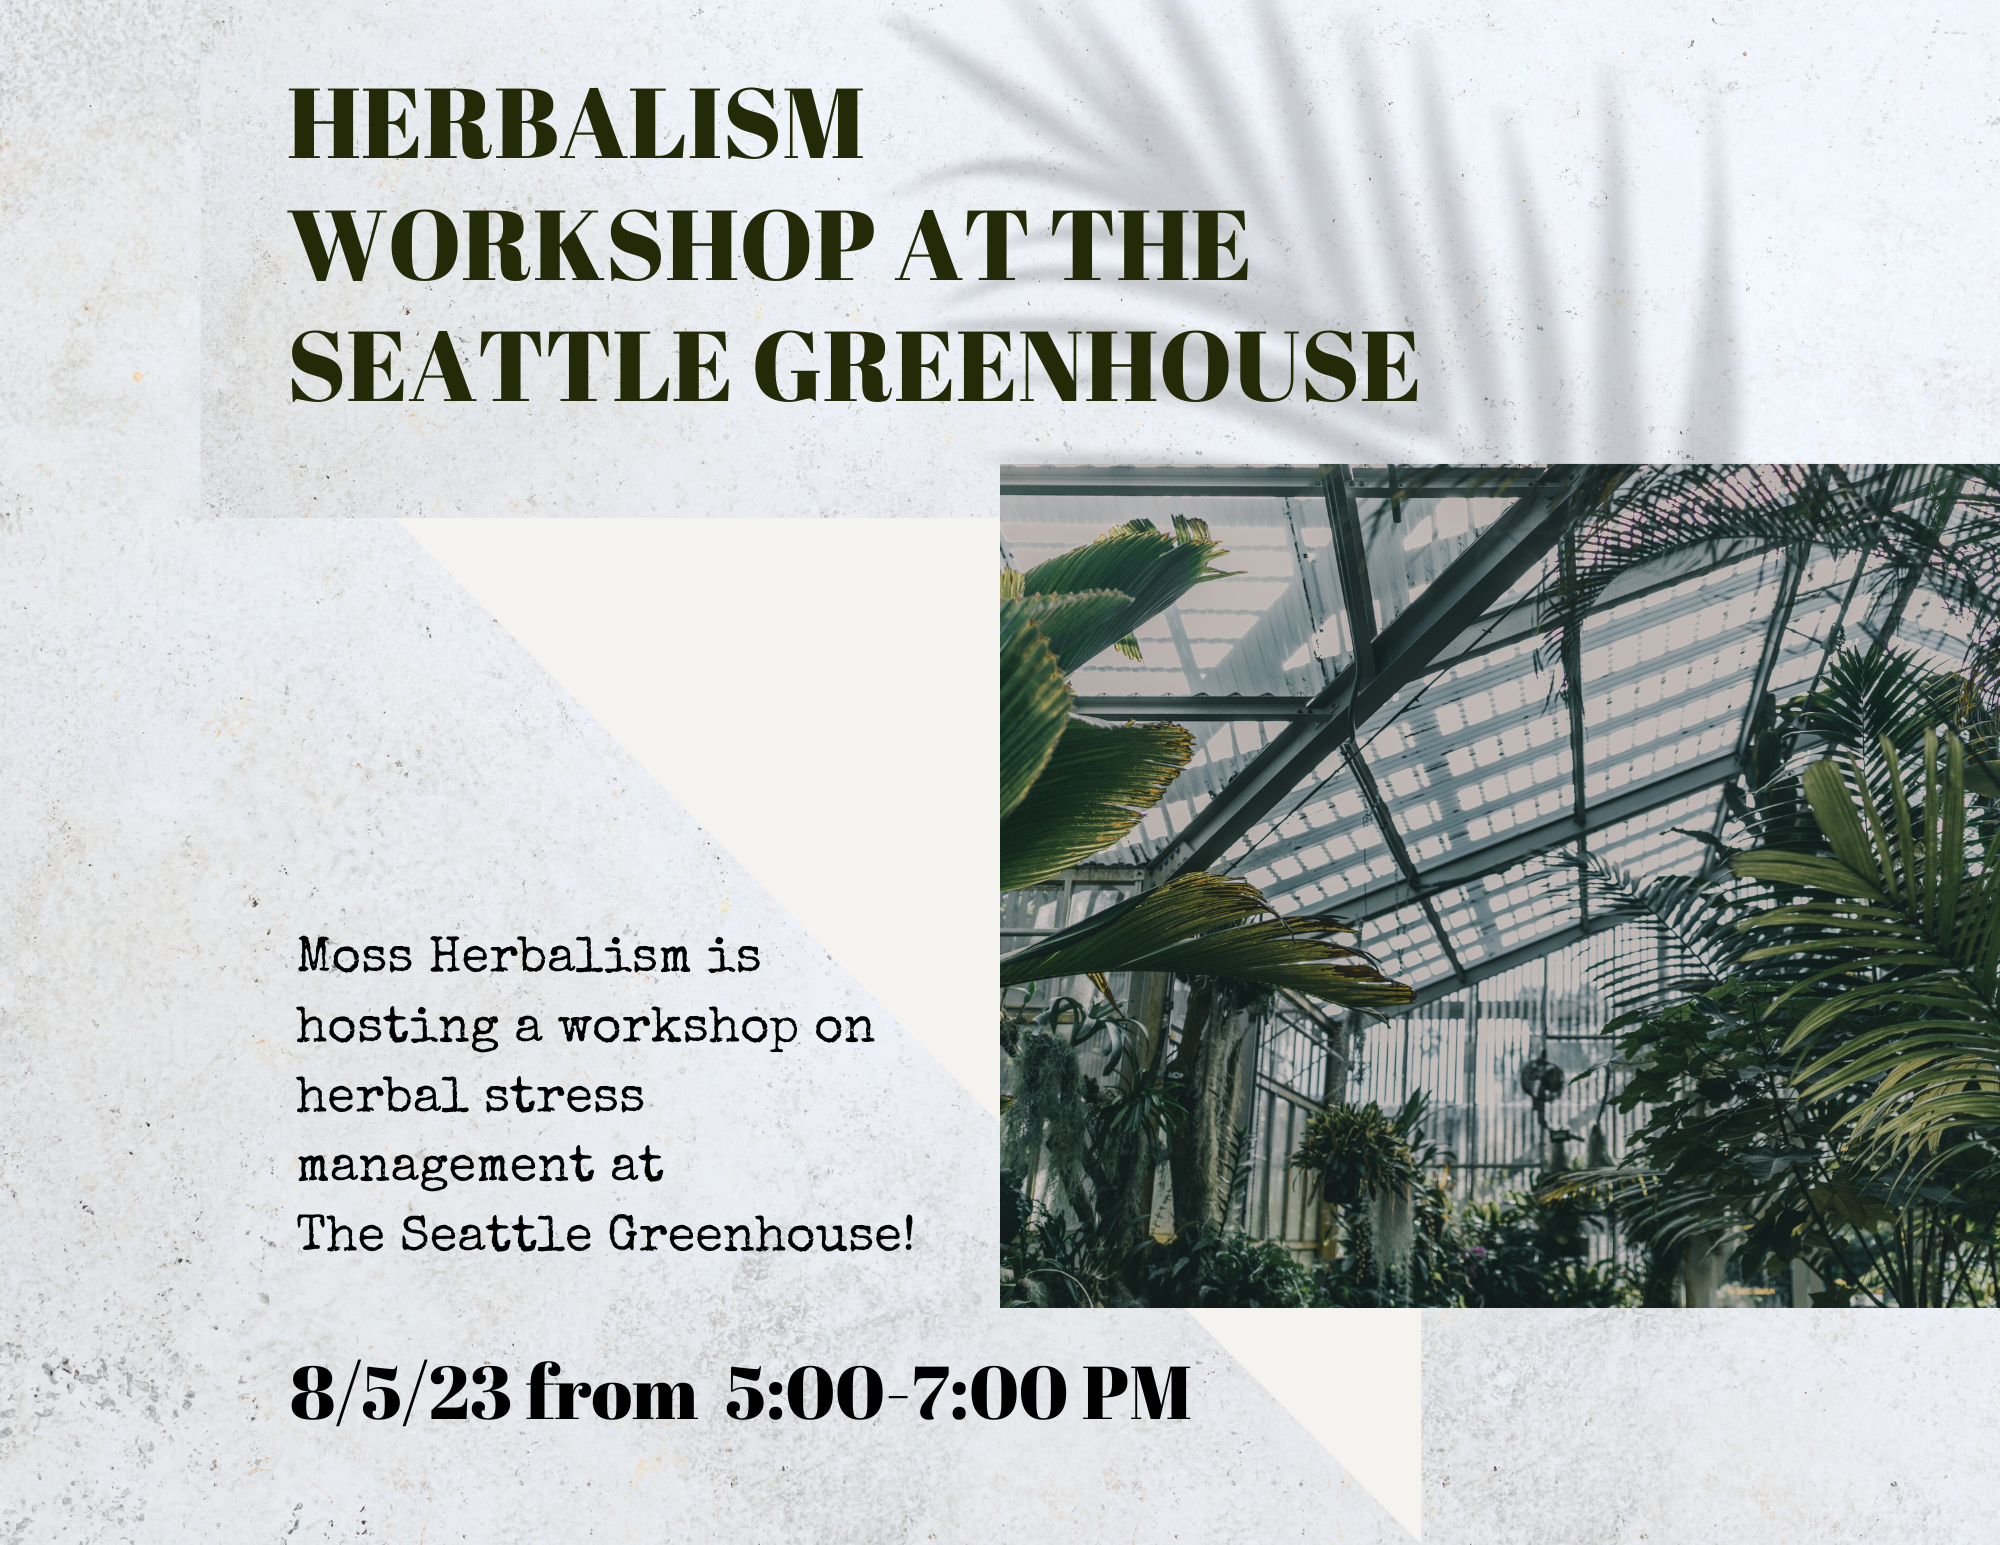 Herbalism Workshop at The Seattle Greenhouse 8/5